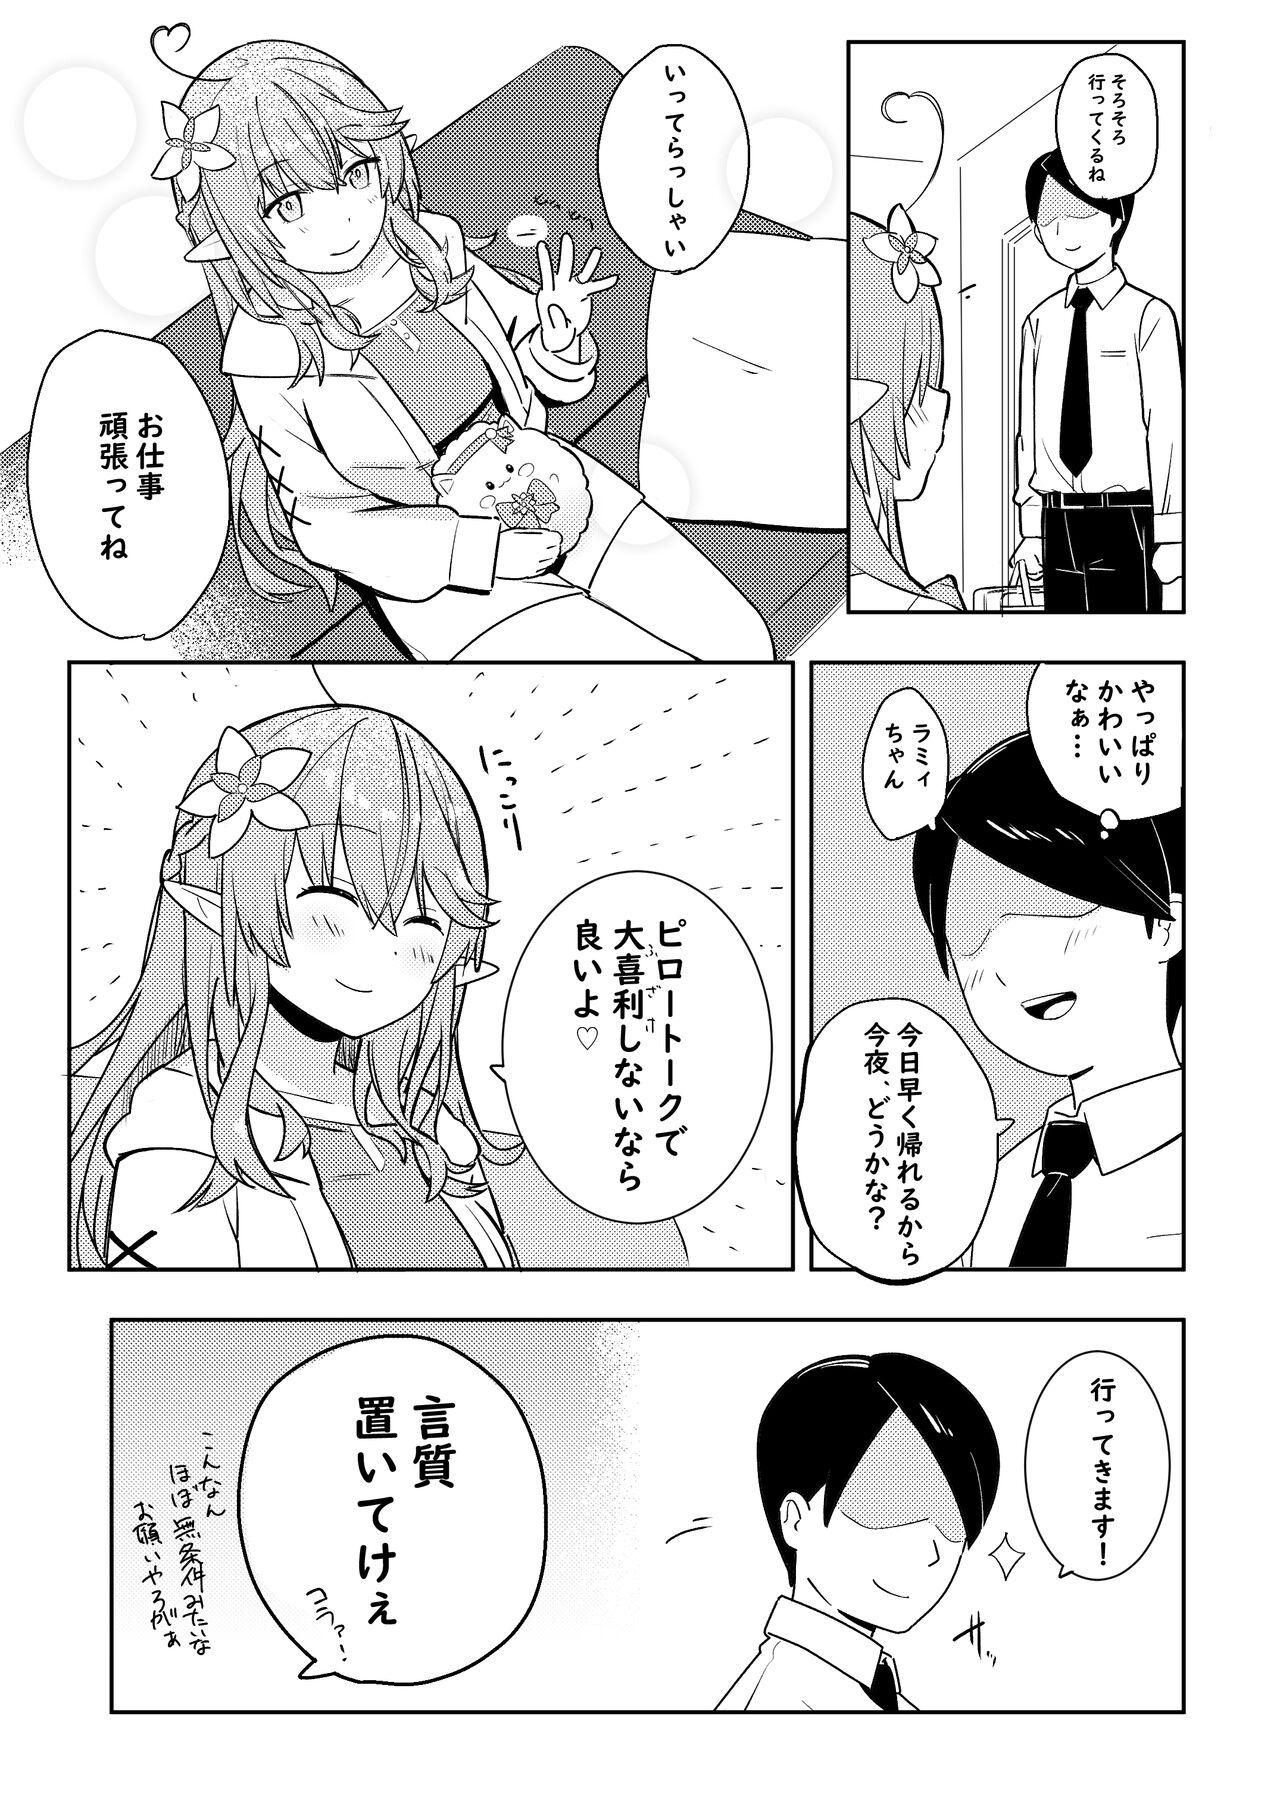 Lolicon Twitter Short Manga - Hololive Male - Page 4